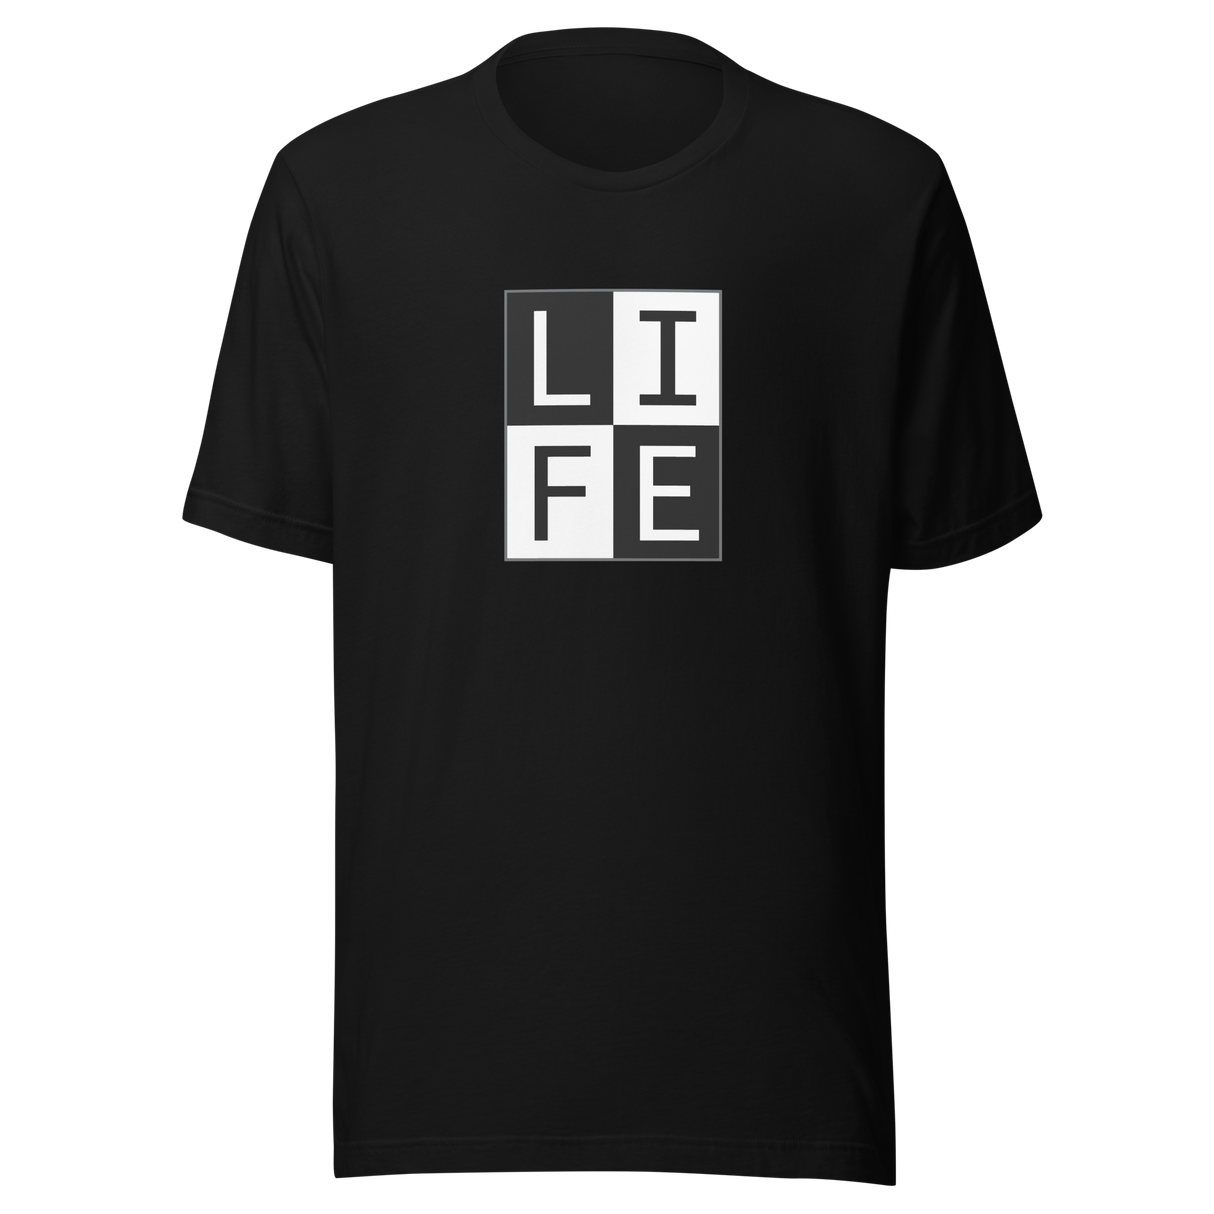 life-square-outline-white-on-black-life-tee-letters-t-shirt-blocks-tee-life-t-shirt-tee#color_black